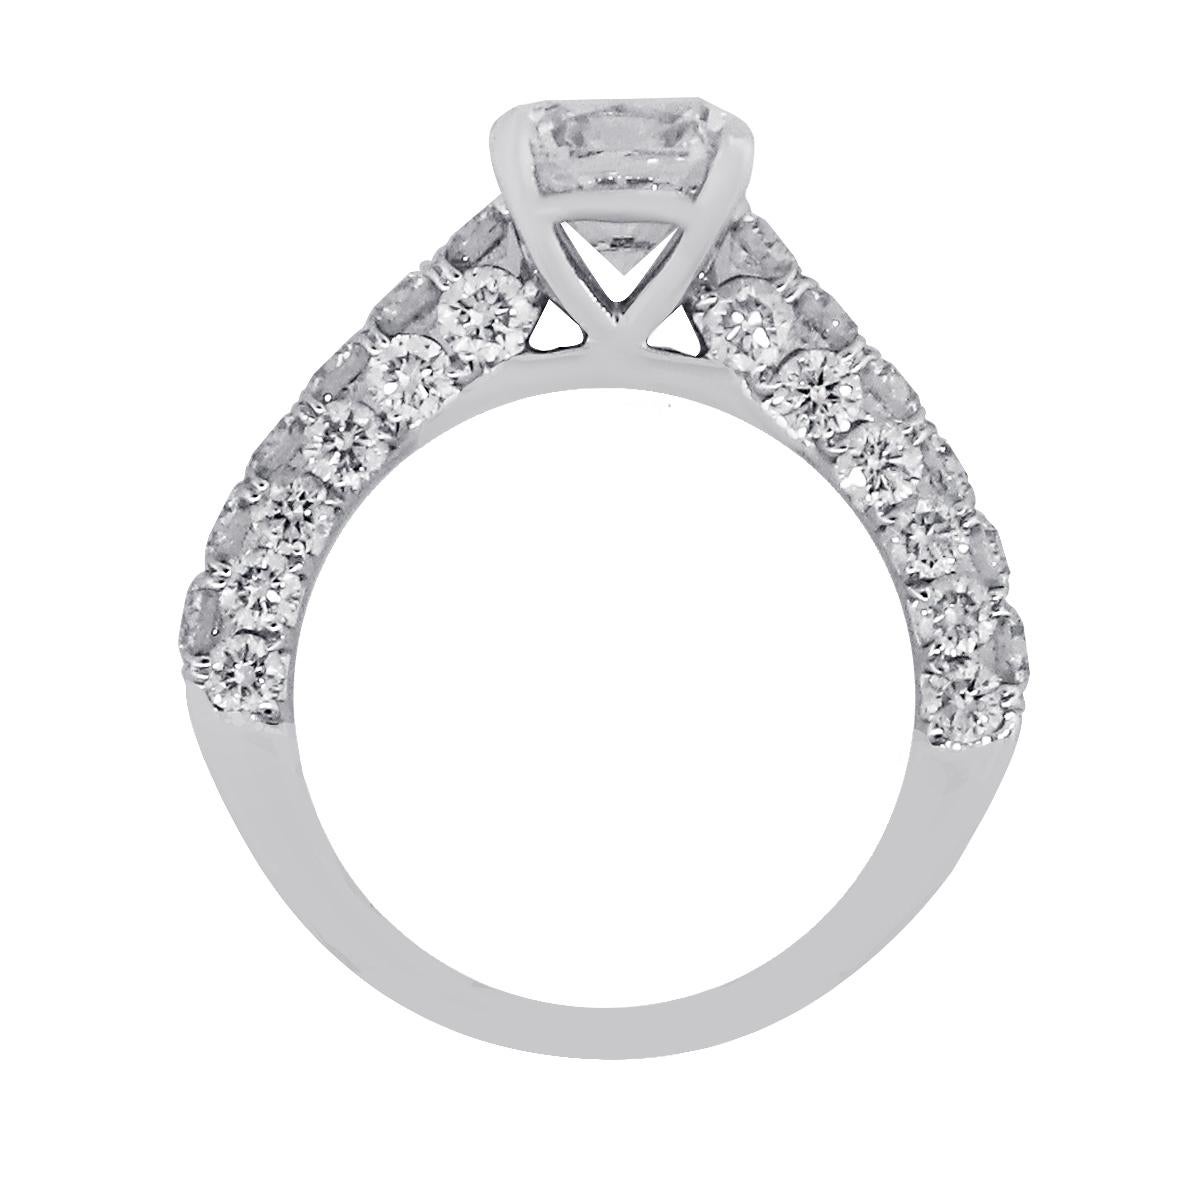 Round Cut GIA Certified Cushion Cut Diamond Engagement Ring